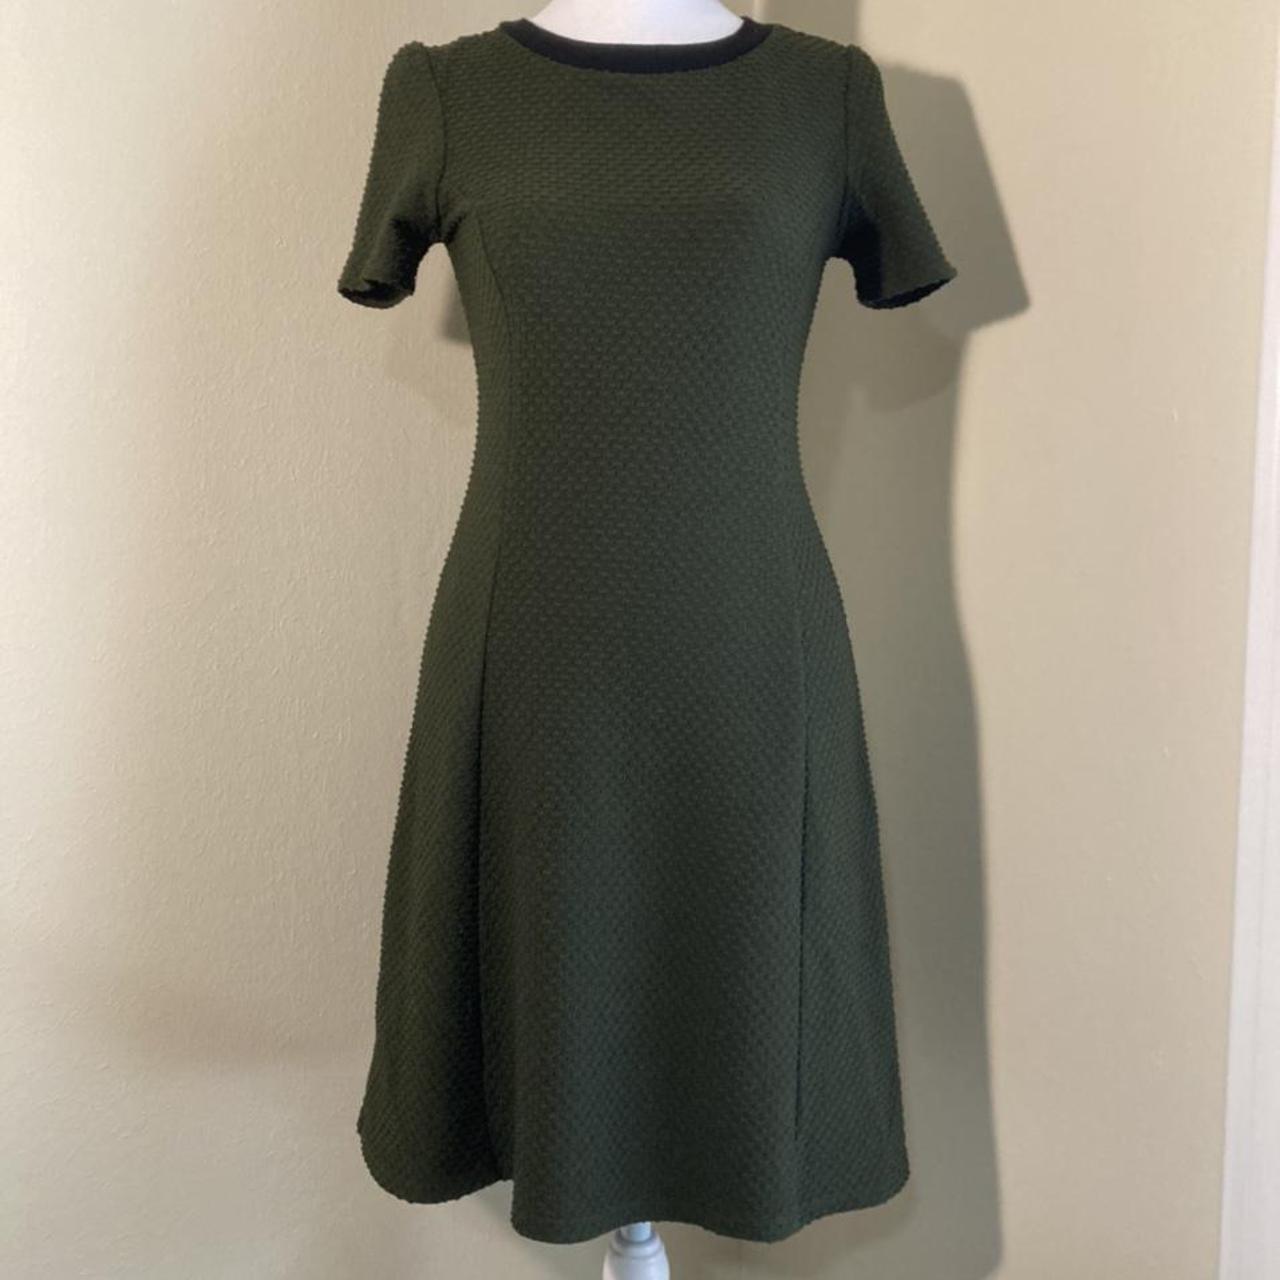 Dorothy Perkins Women's Khaki and Green Dress